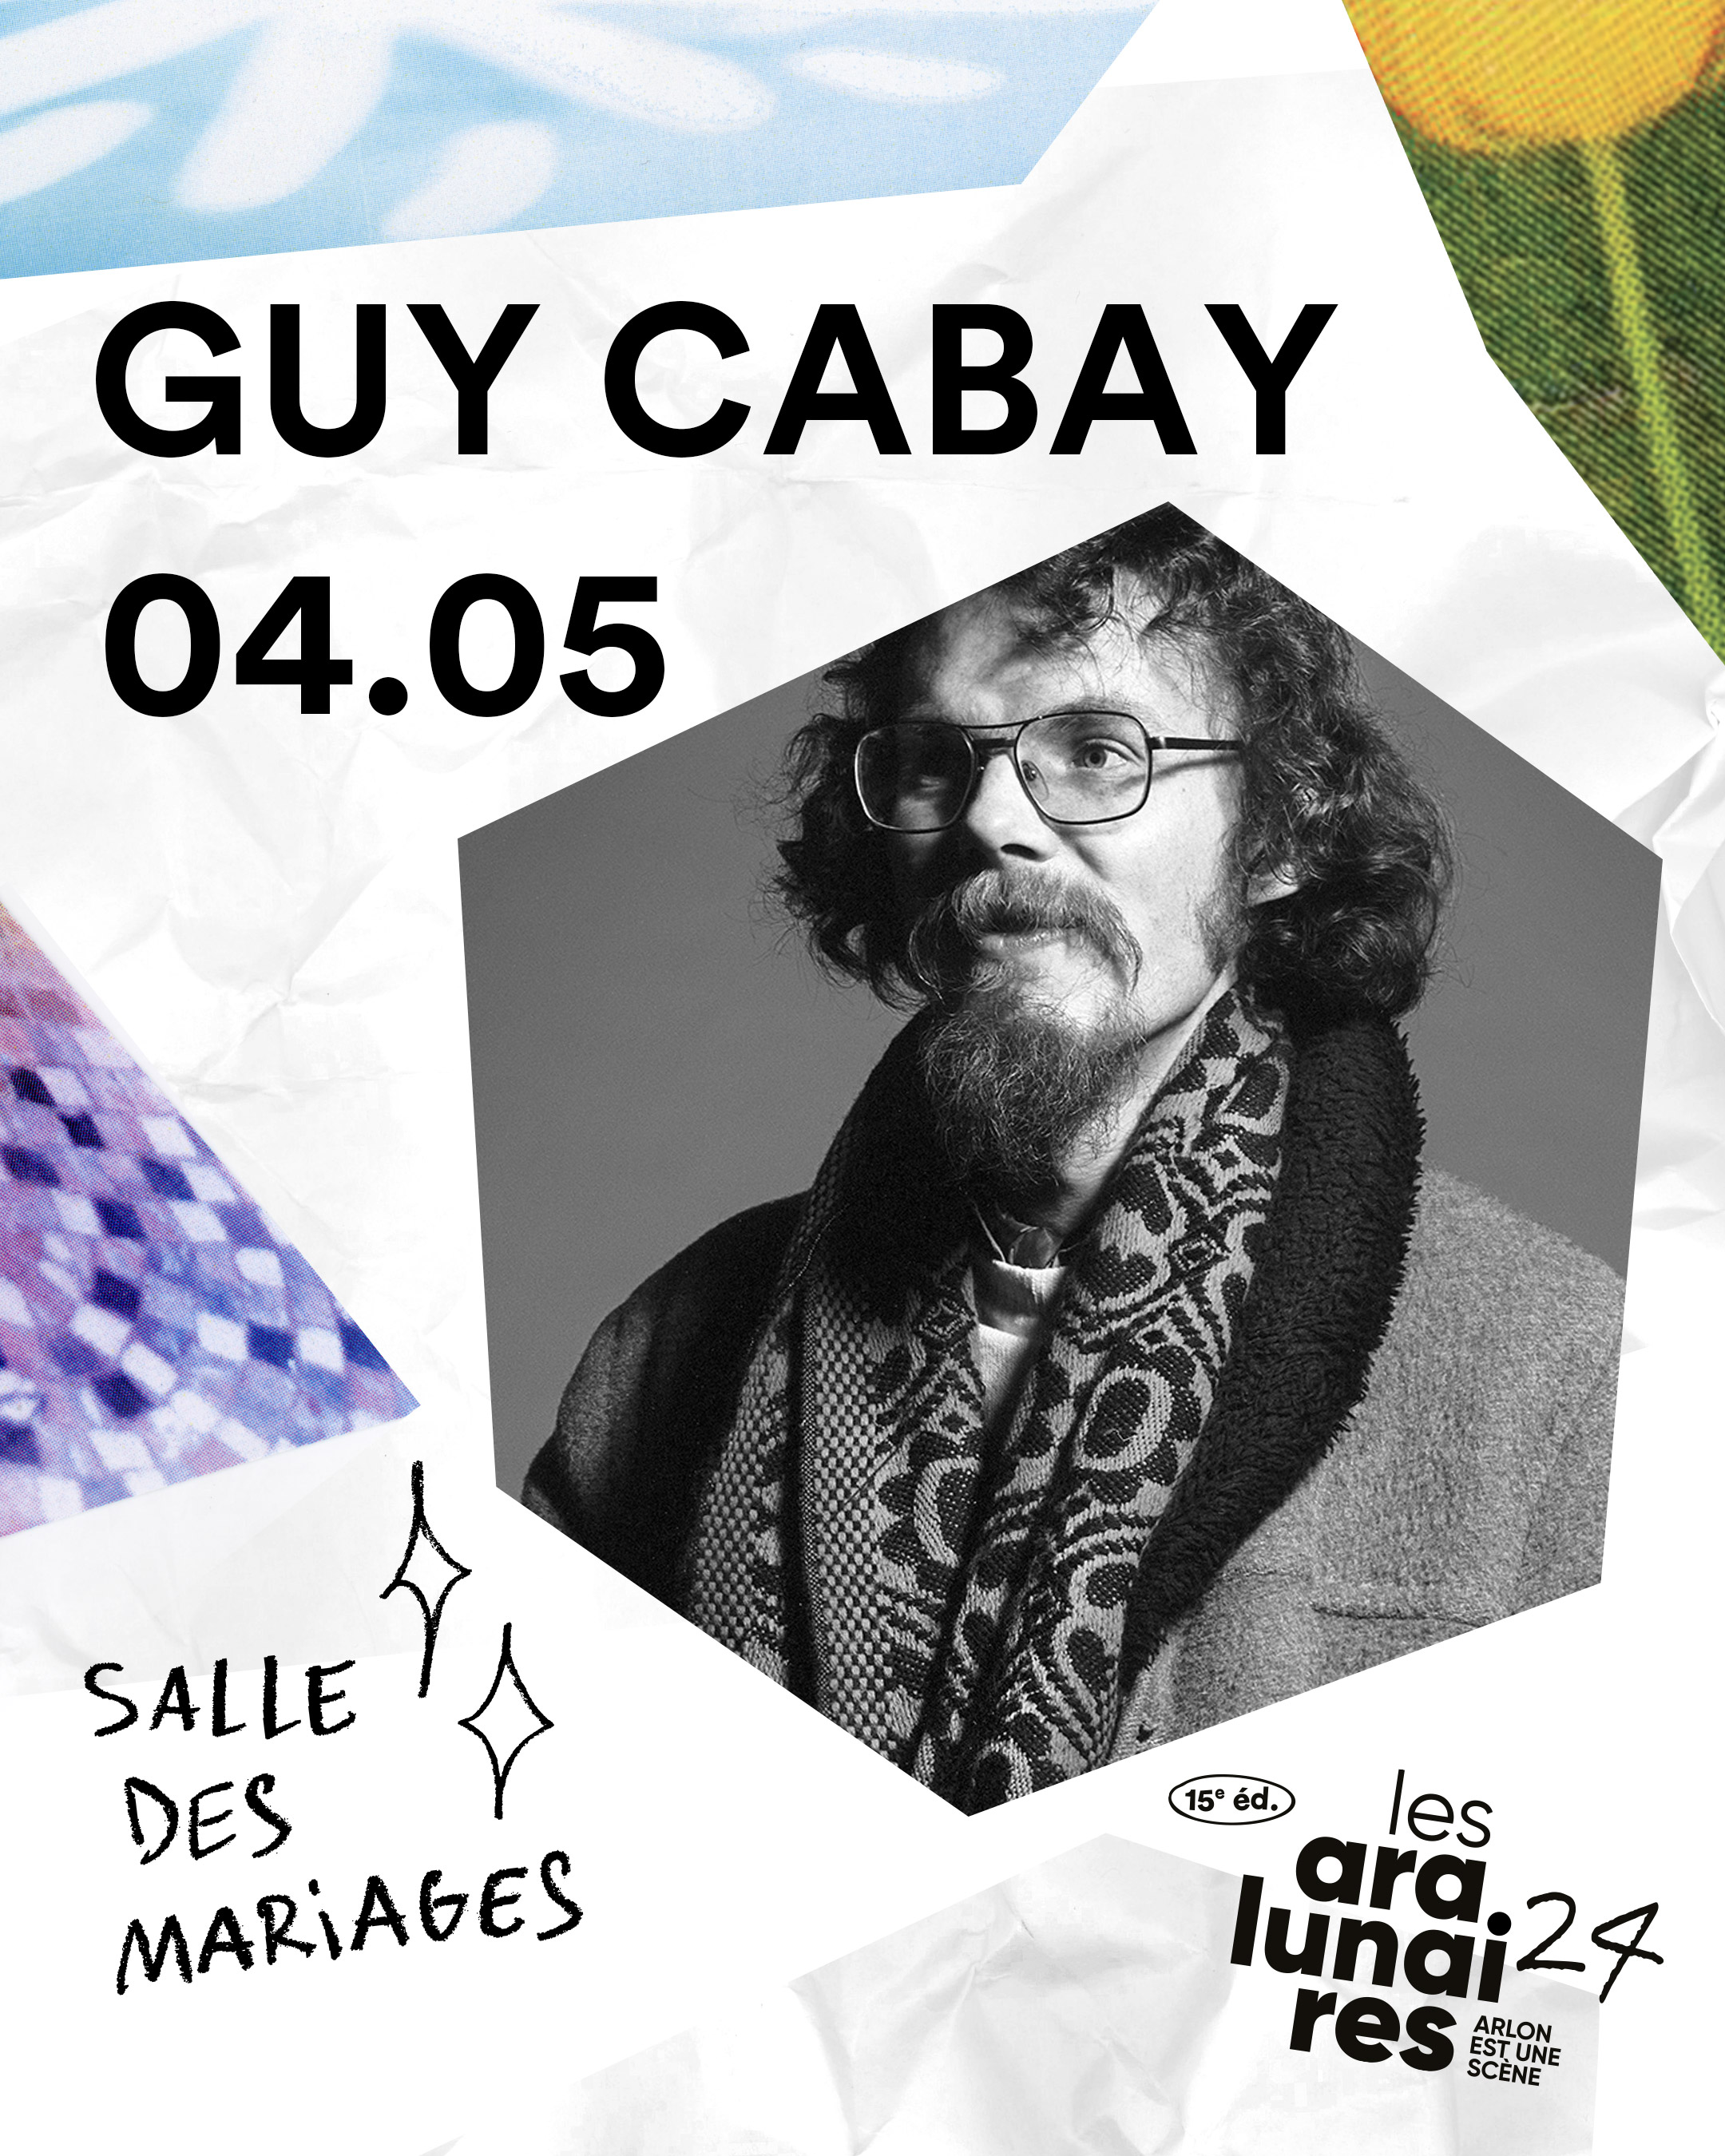 Guy Cabay - The aralunarians